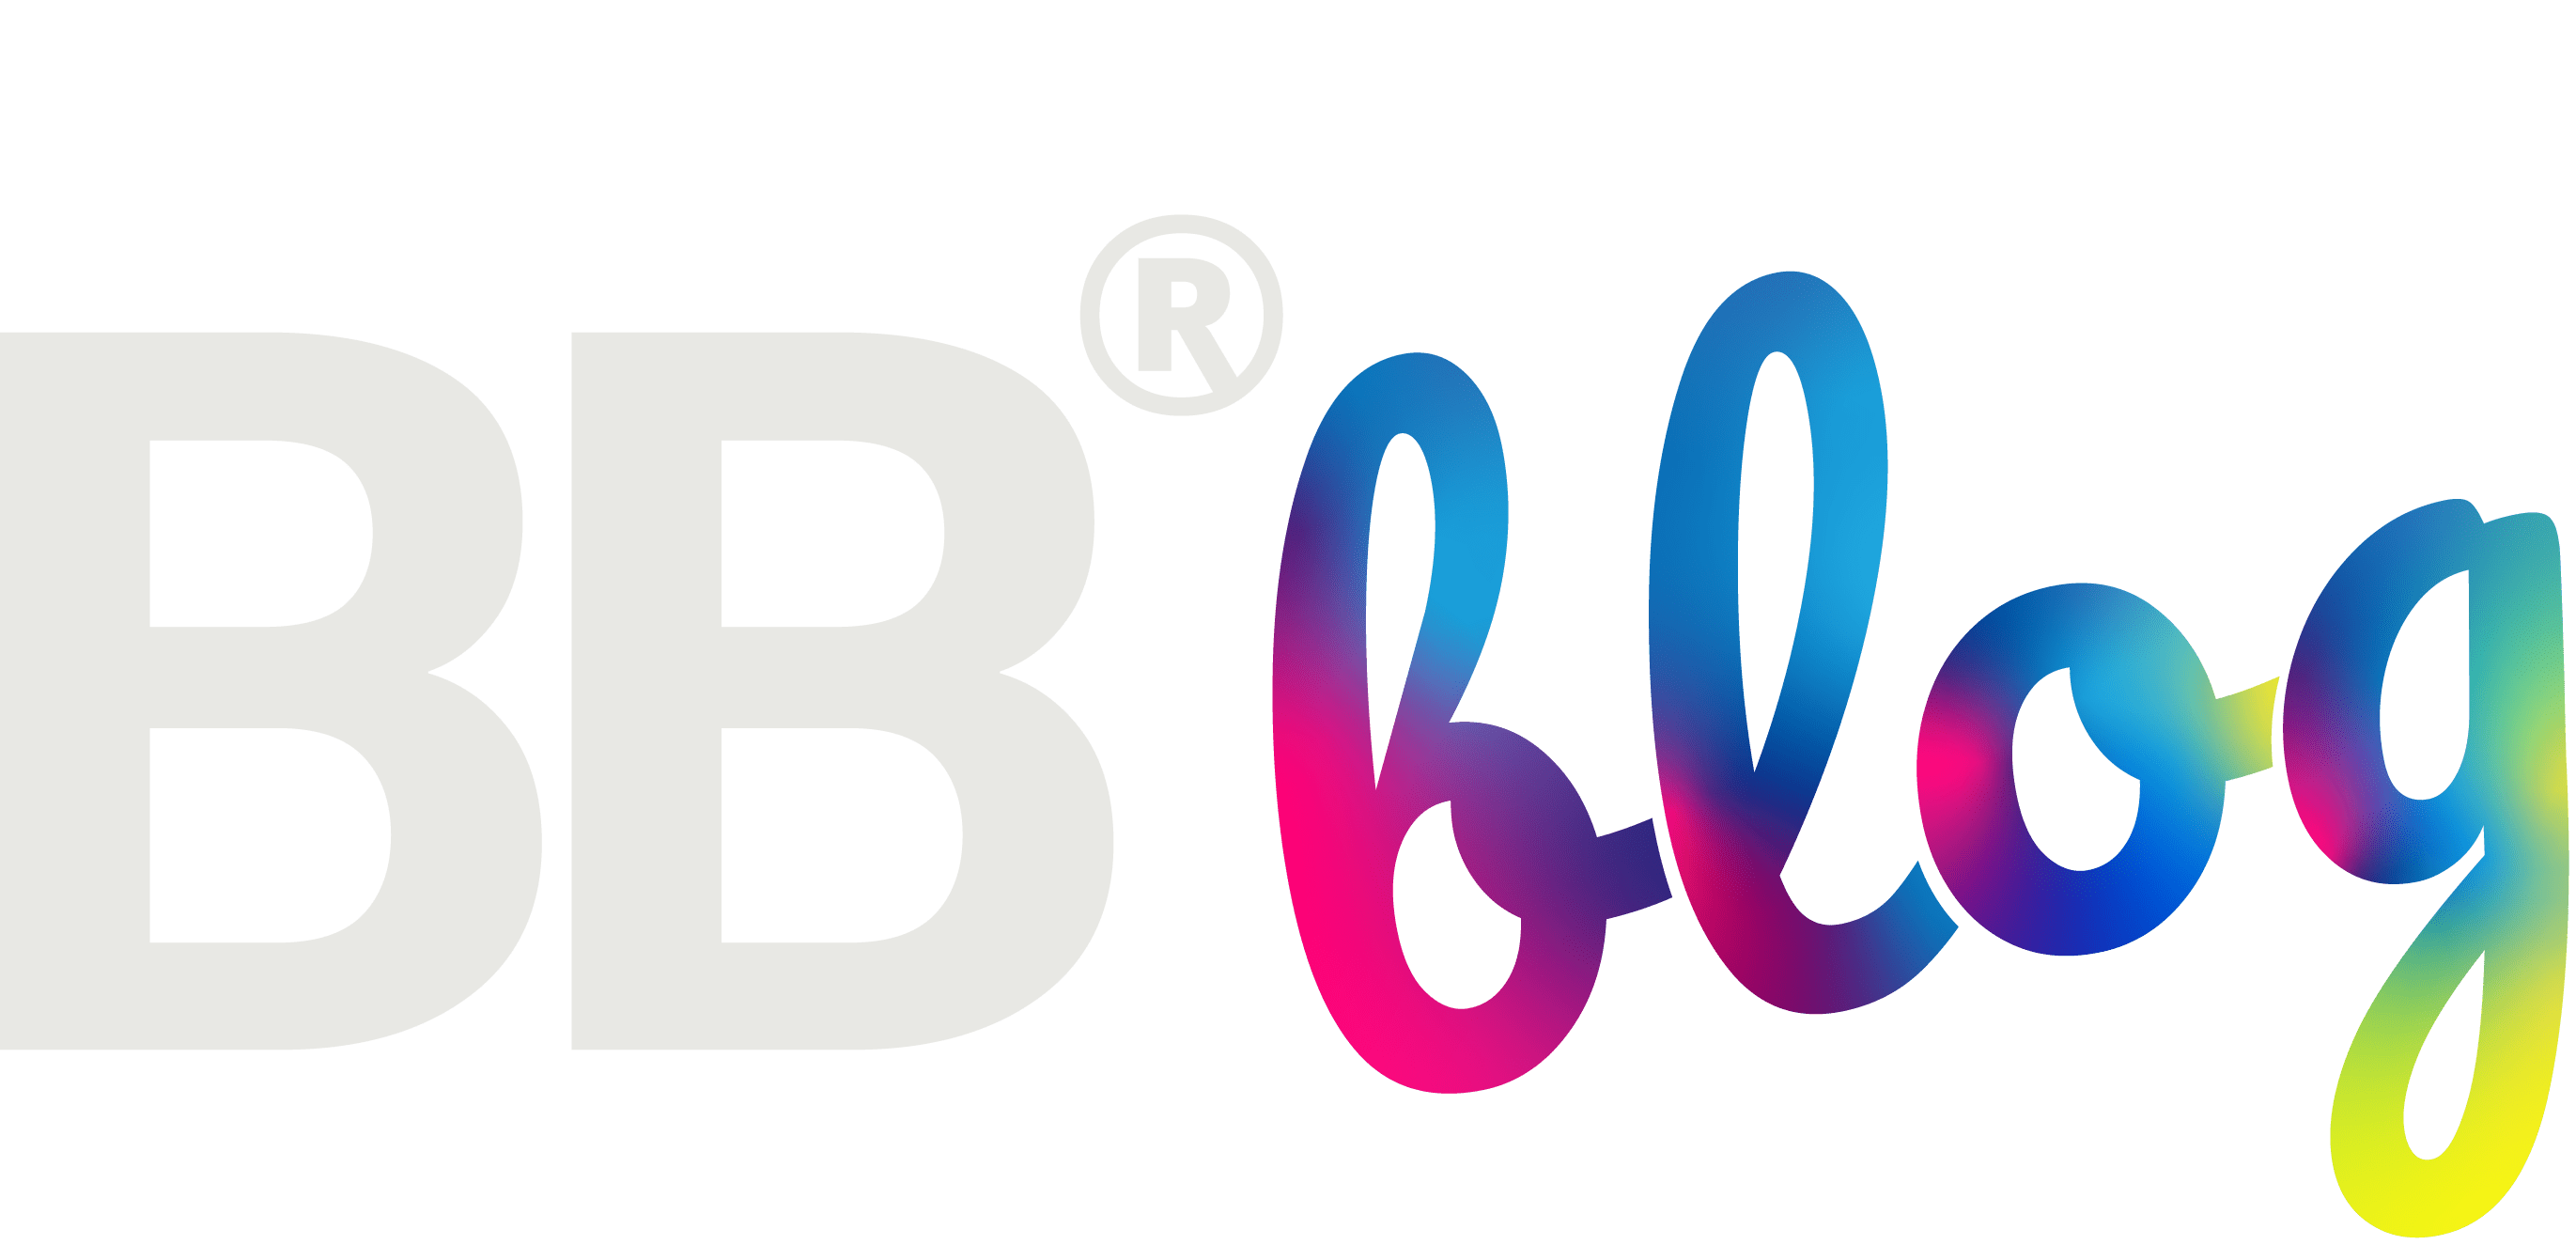 BBS_blog_logo